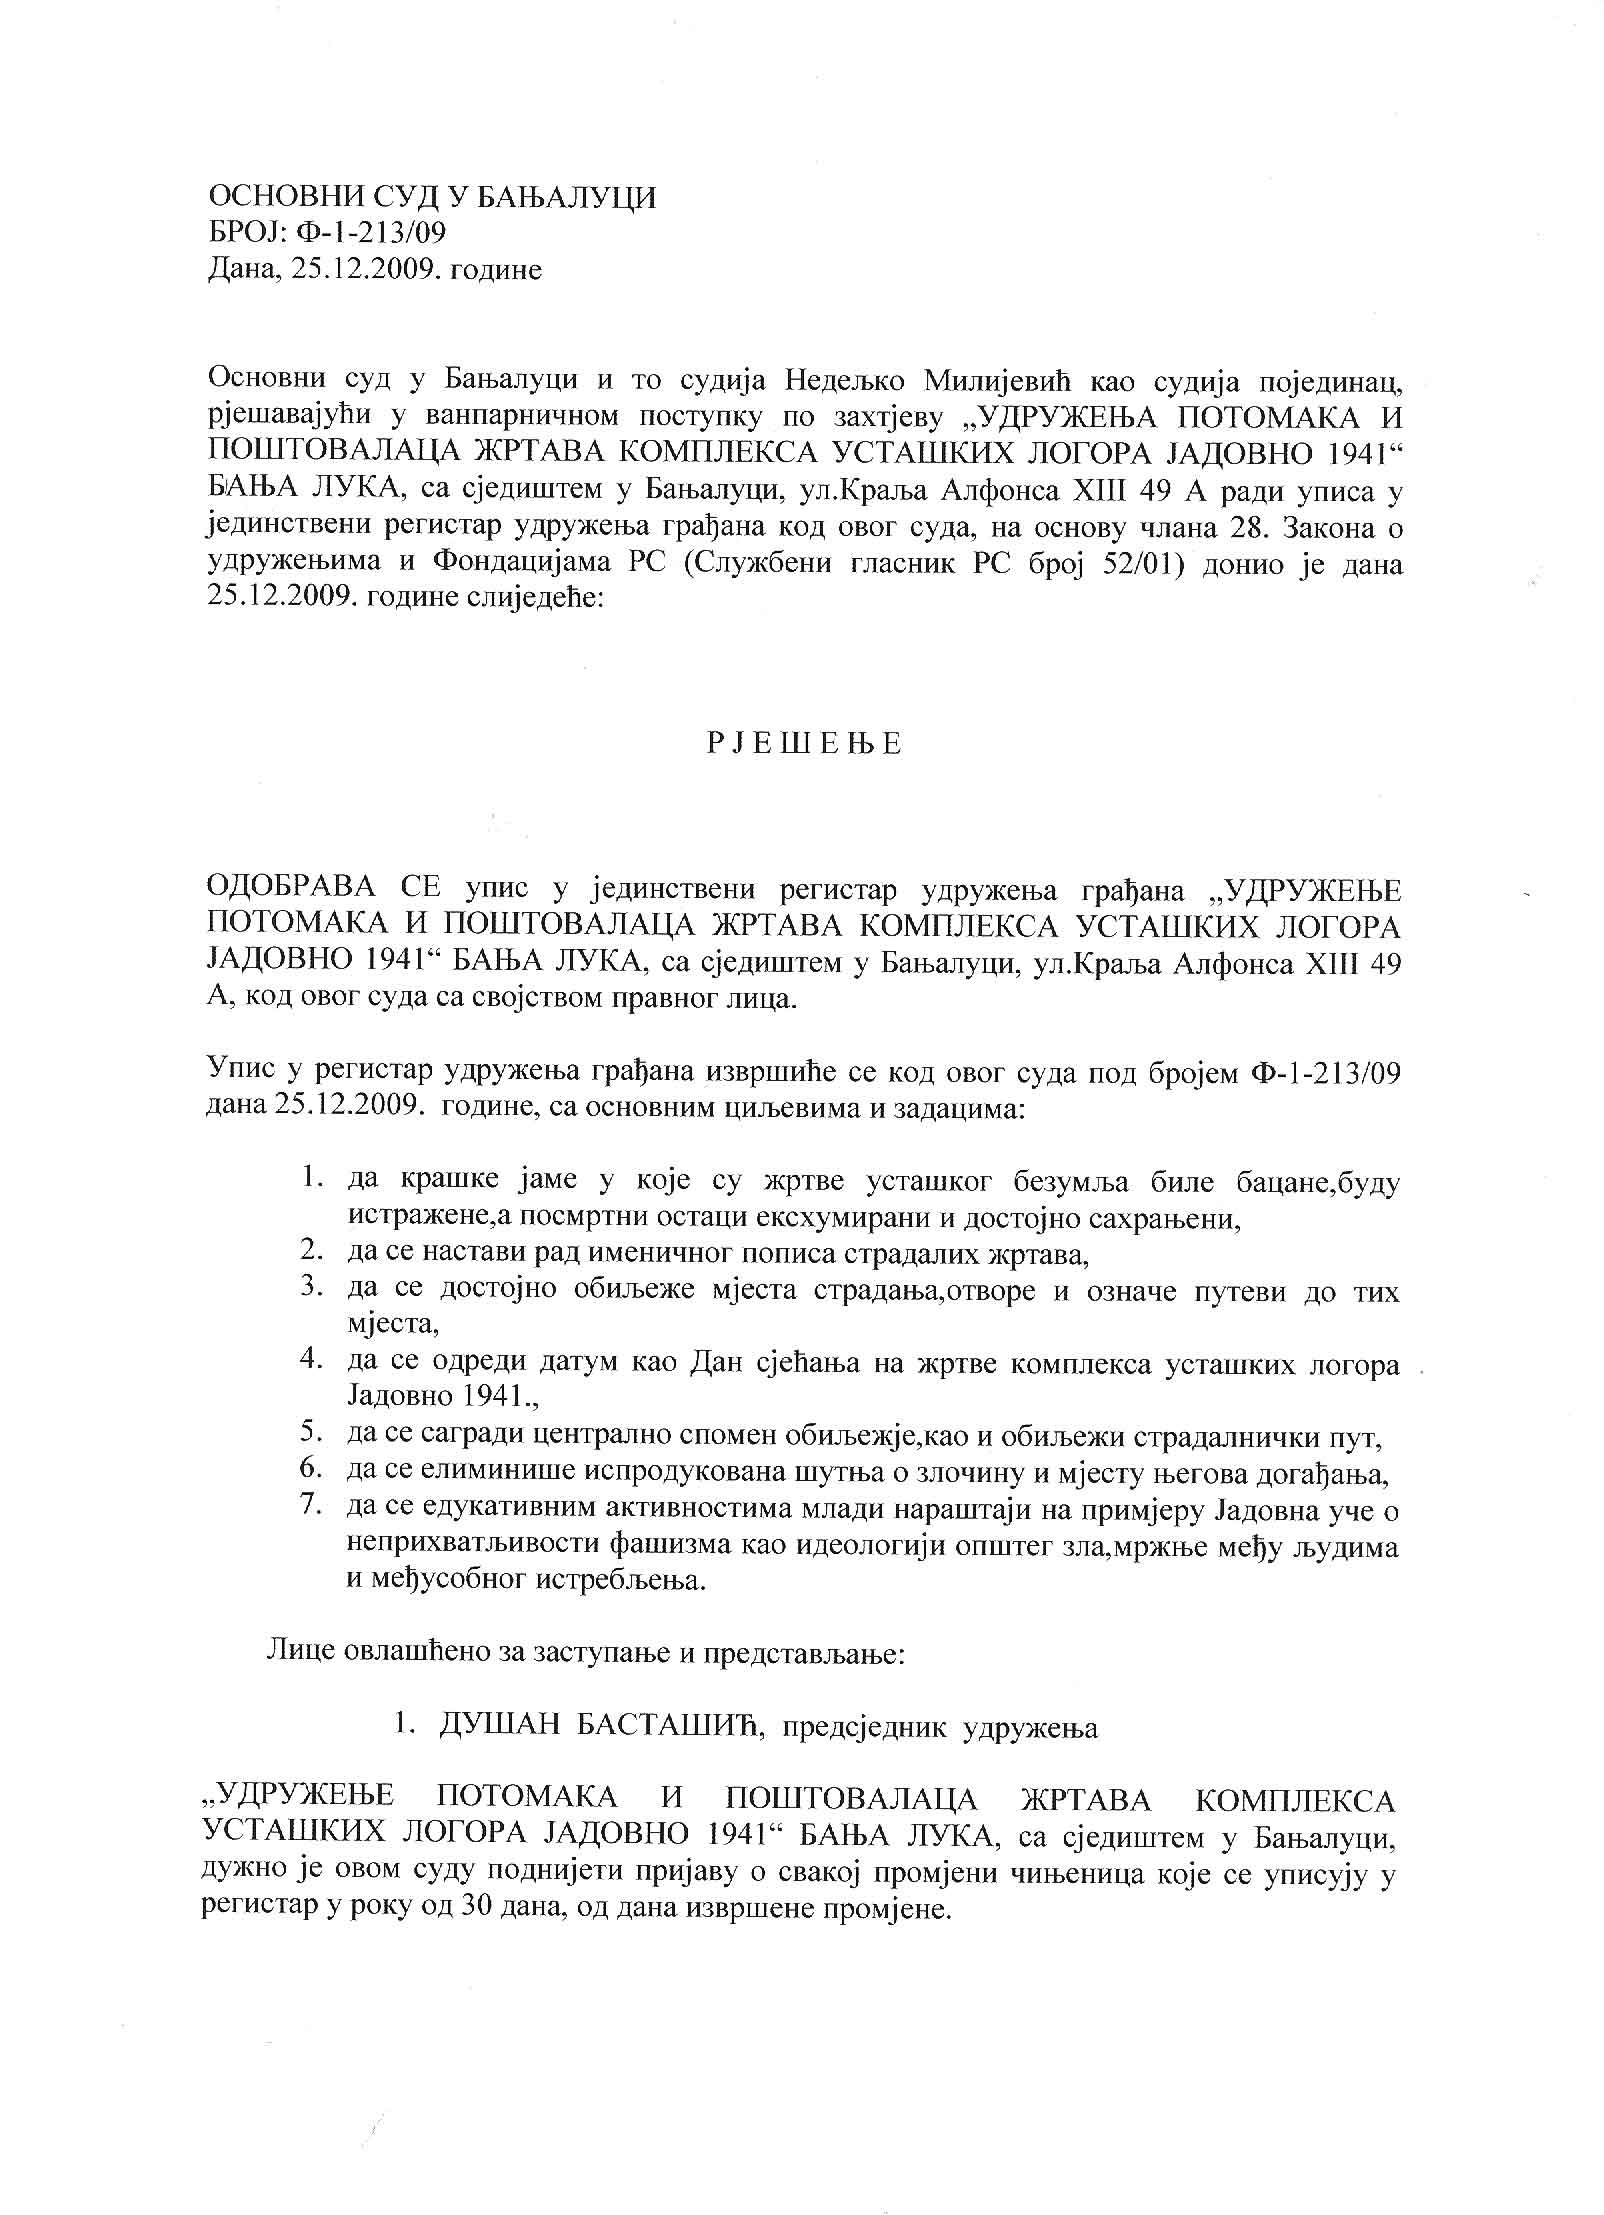 Sudska registracija udruženja Jadovno 1941.